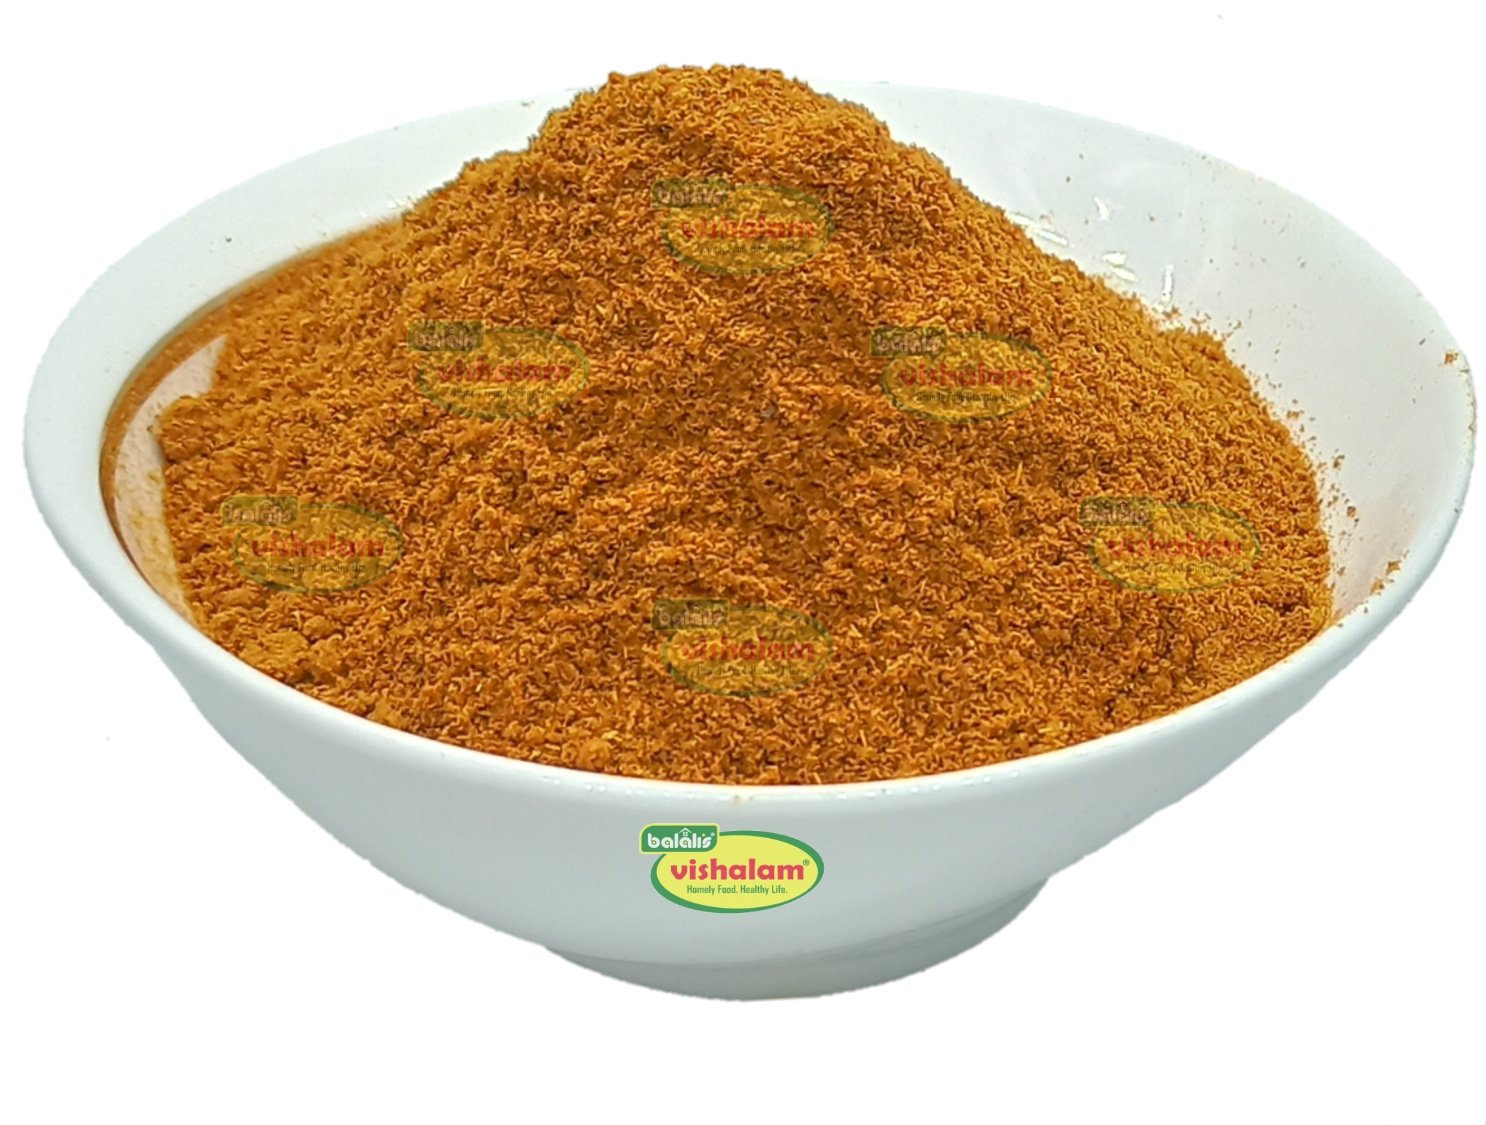 Kulambu Chilli Powder - Balali's Vishalam